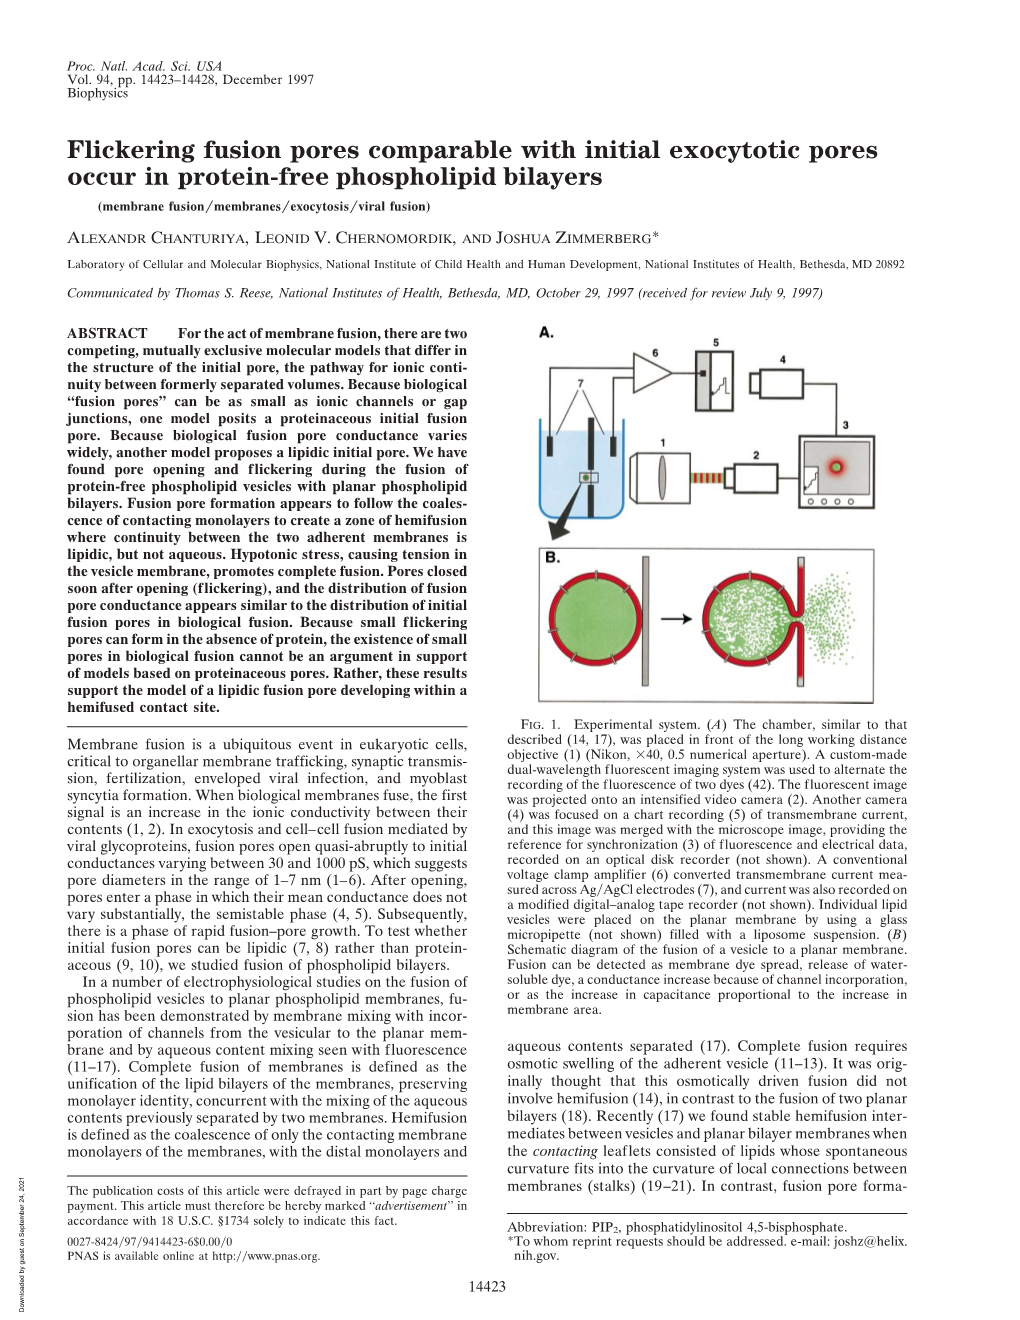 Flickering Fusion Pores Comparable with Initial Exocytotic Pores Occur in Protein-Free Phospholipid Bilayers (Membrane Fusion͞membranes͞exocytosis͞viral Fusion)